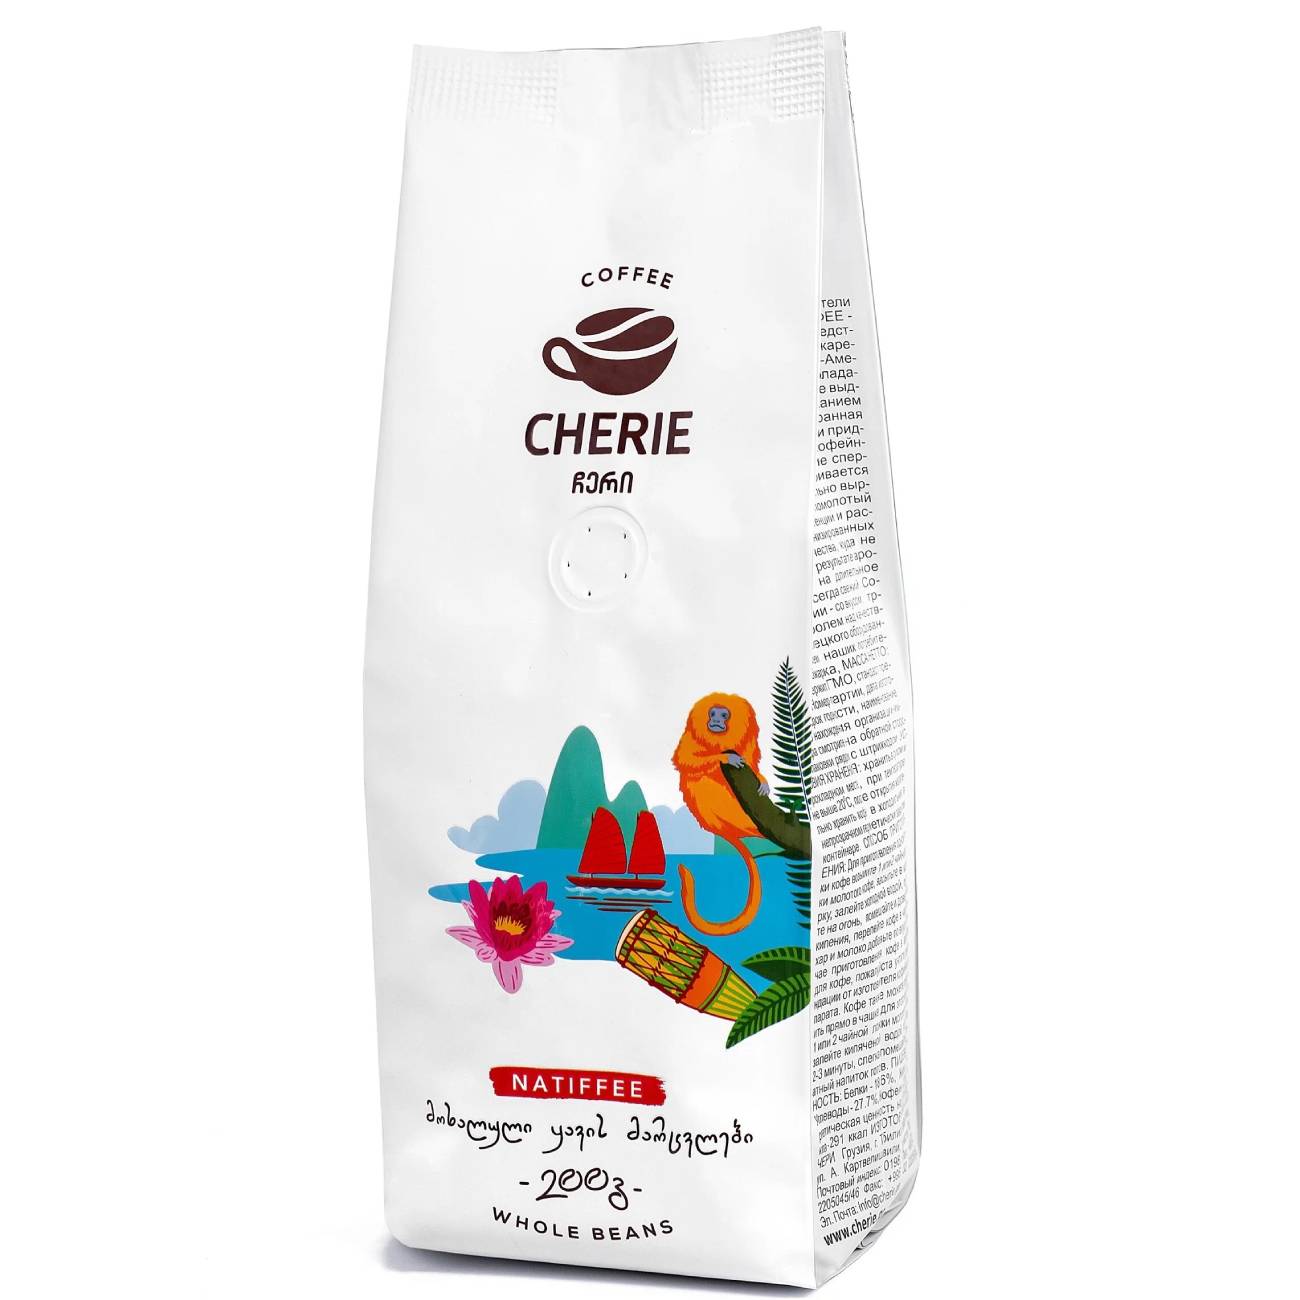 Кофе Cherie зерно натиффее, 200 г